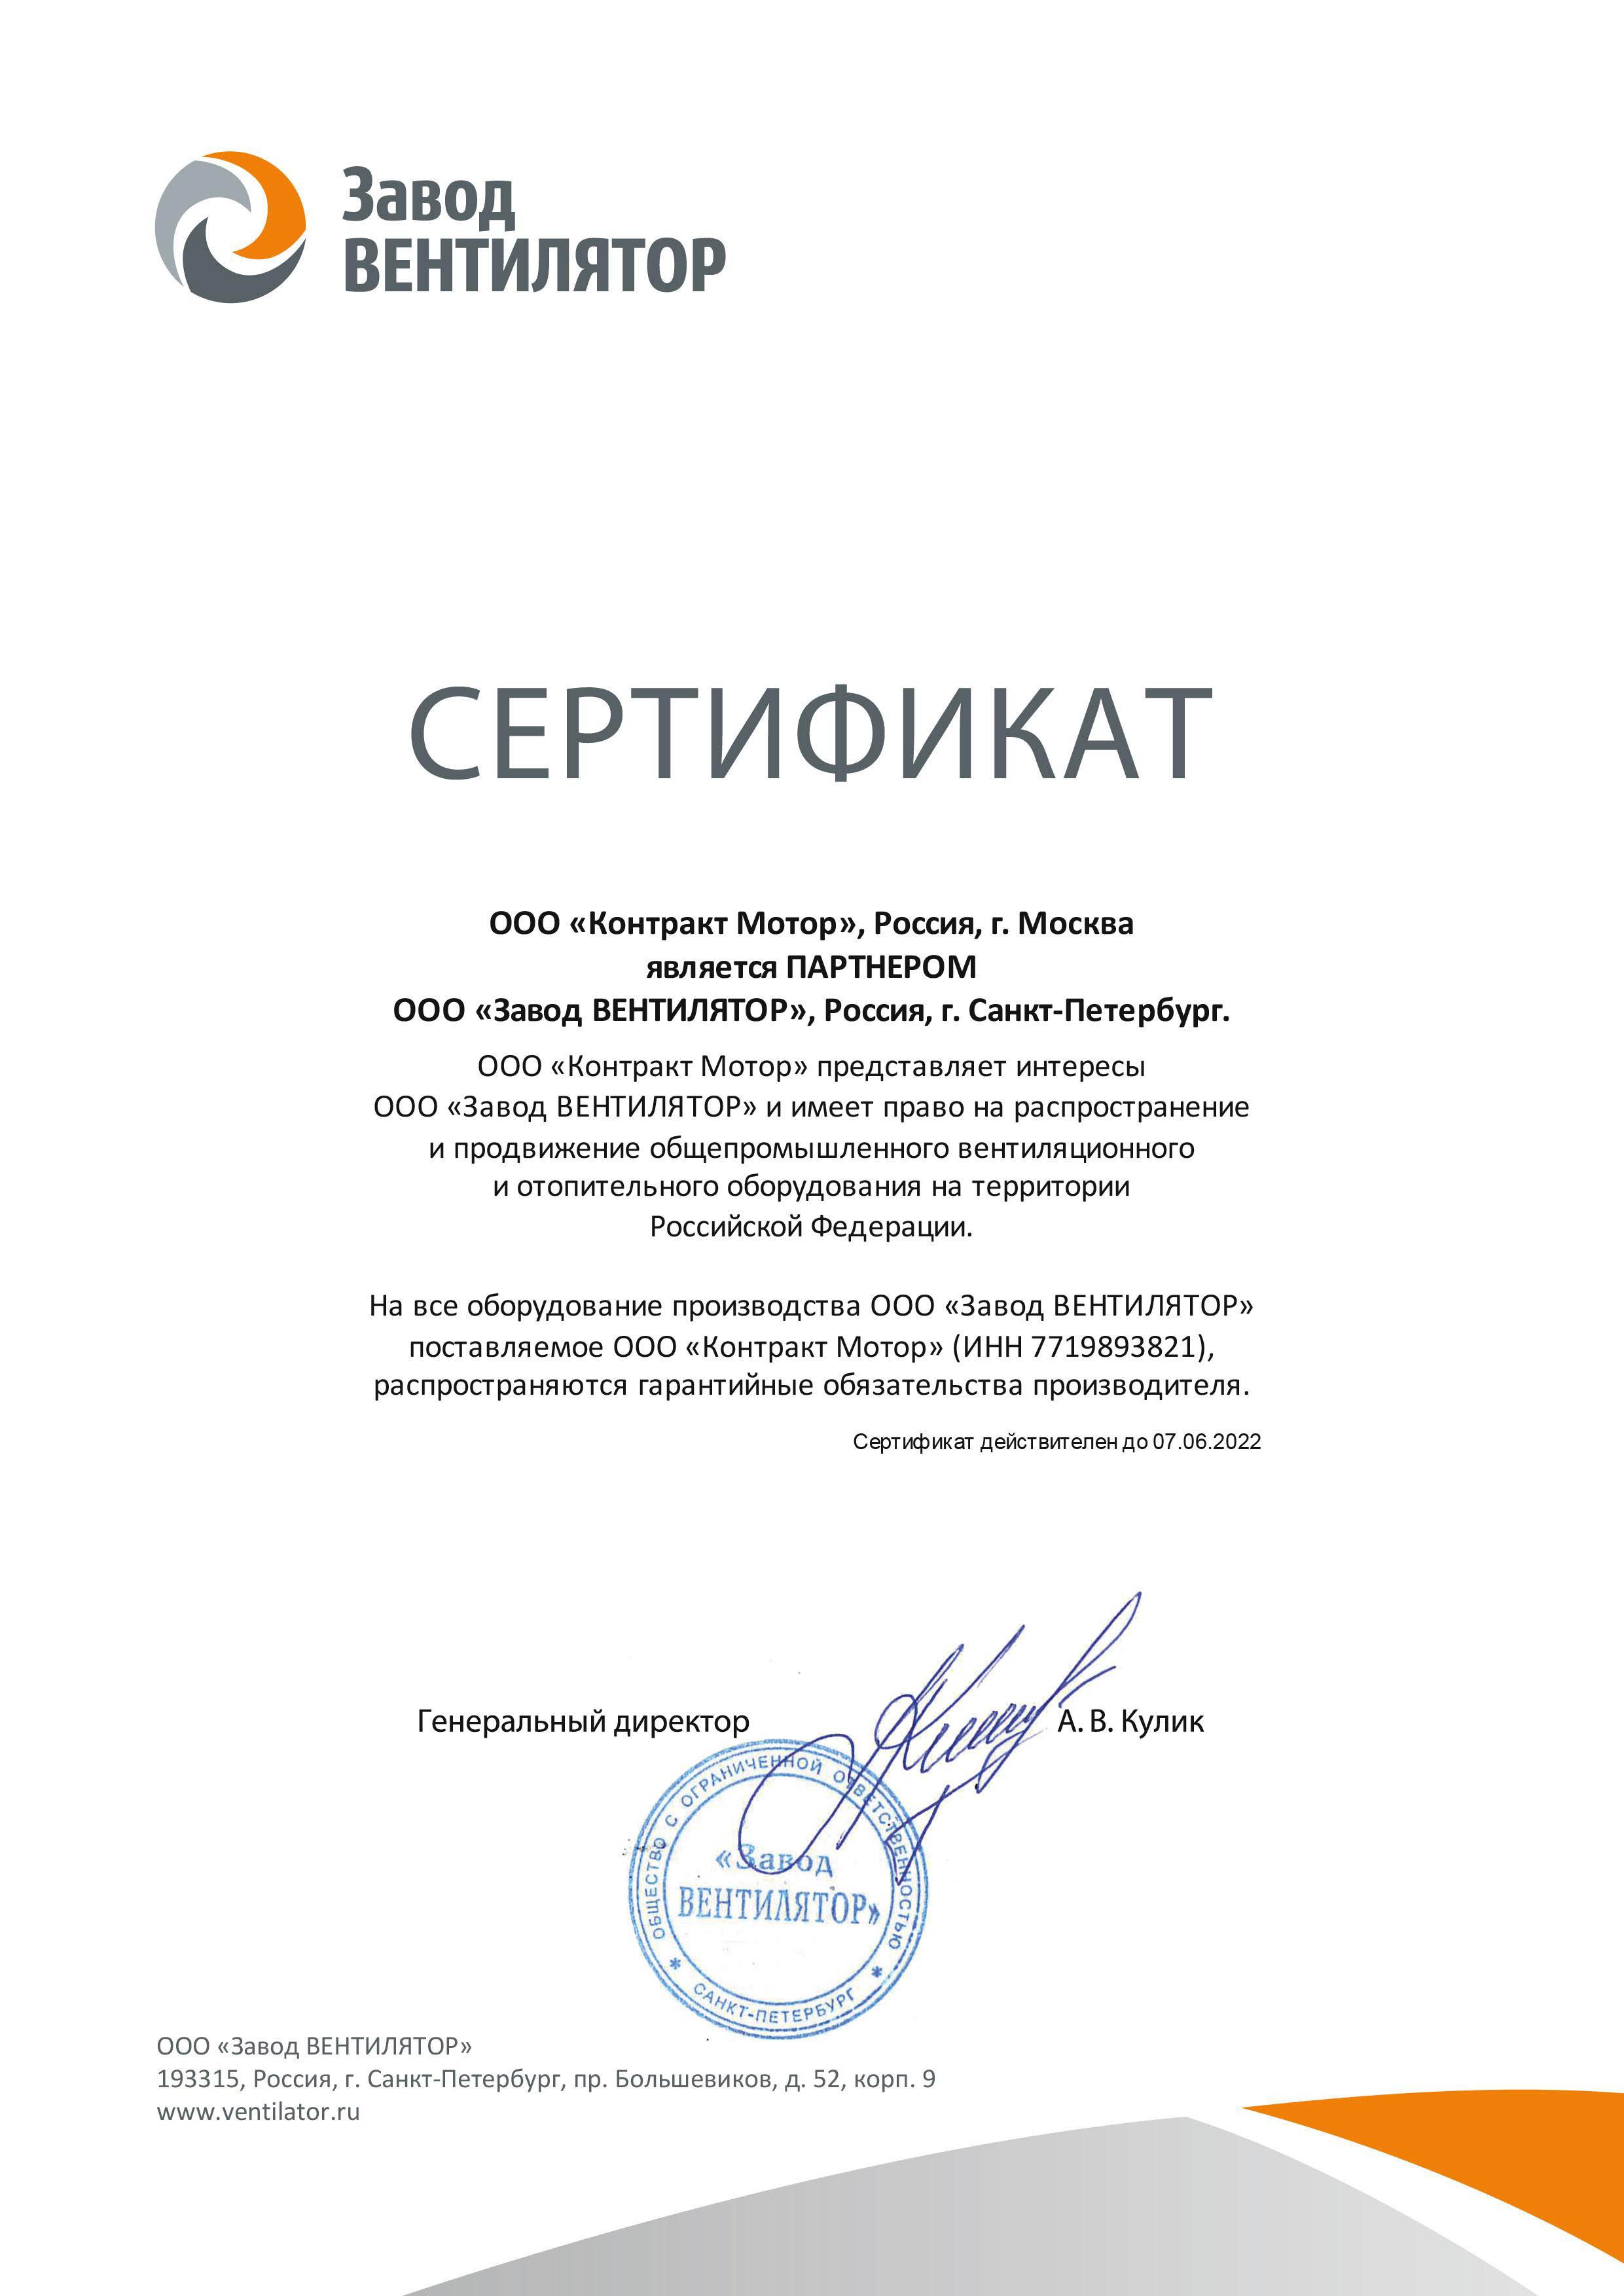 Сертификат ООО «Завод ВЕНТИЛЯТОР»